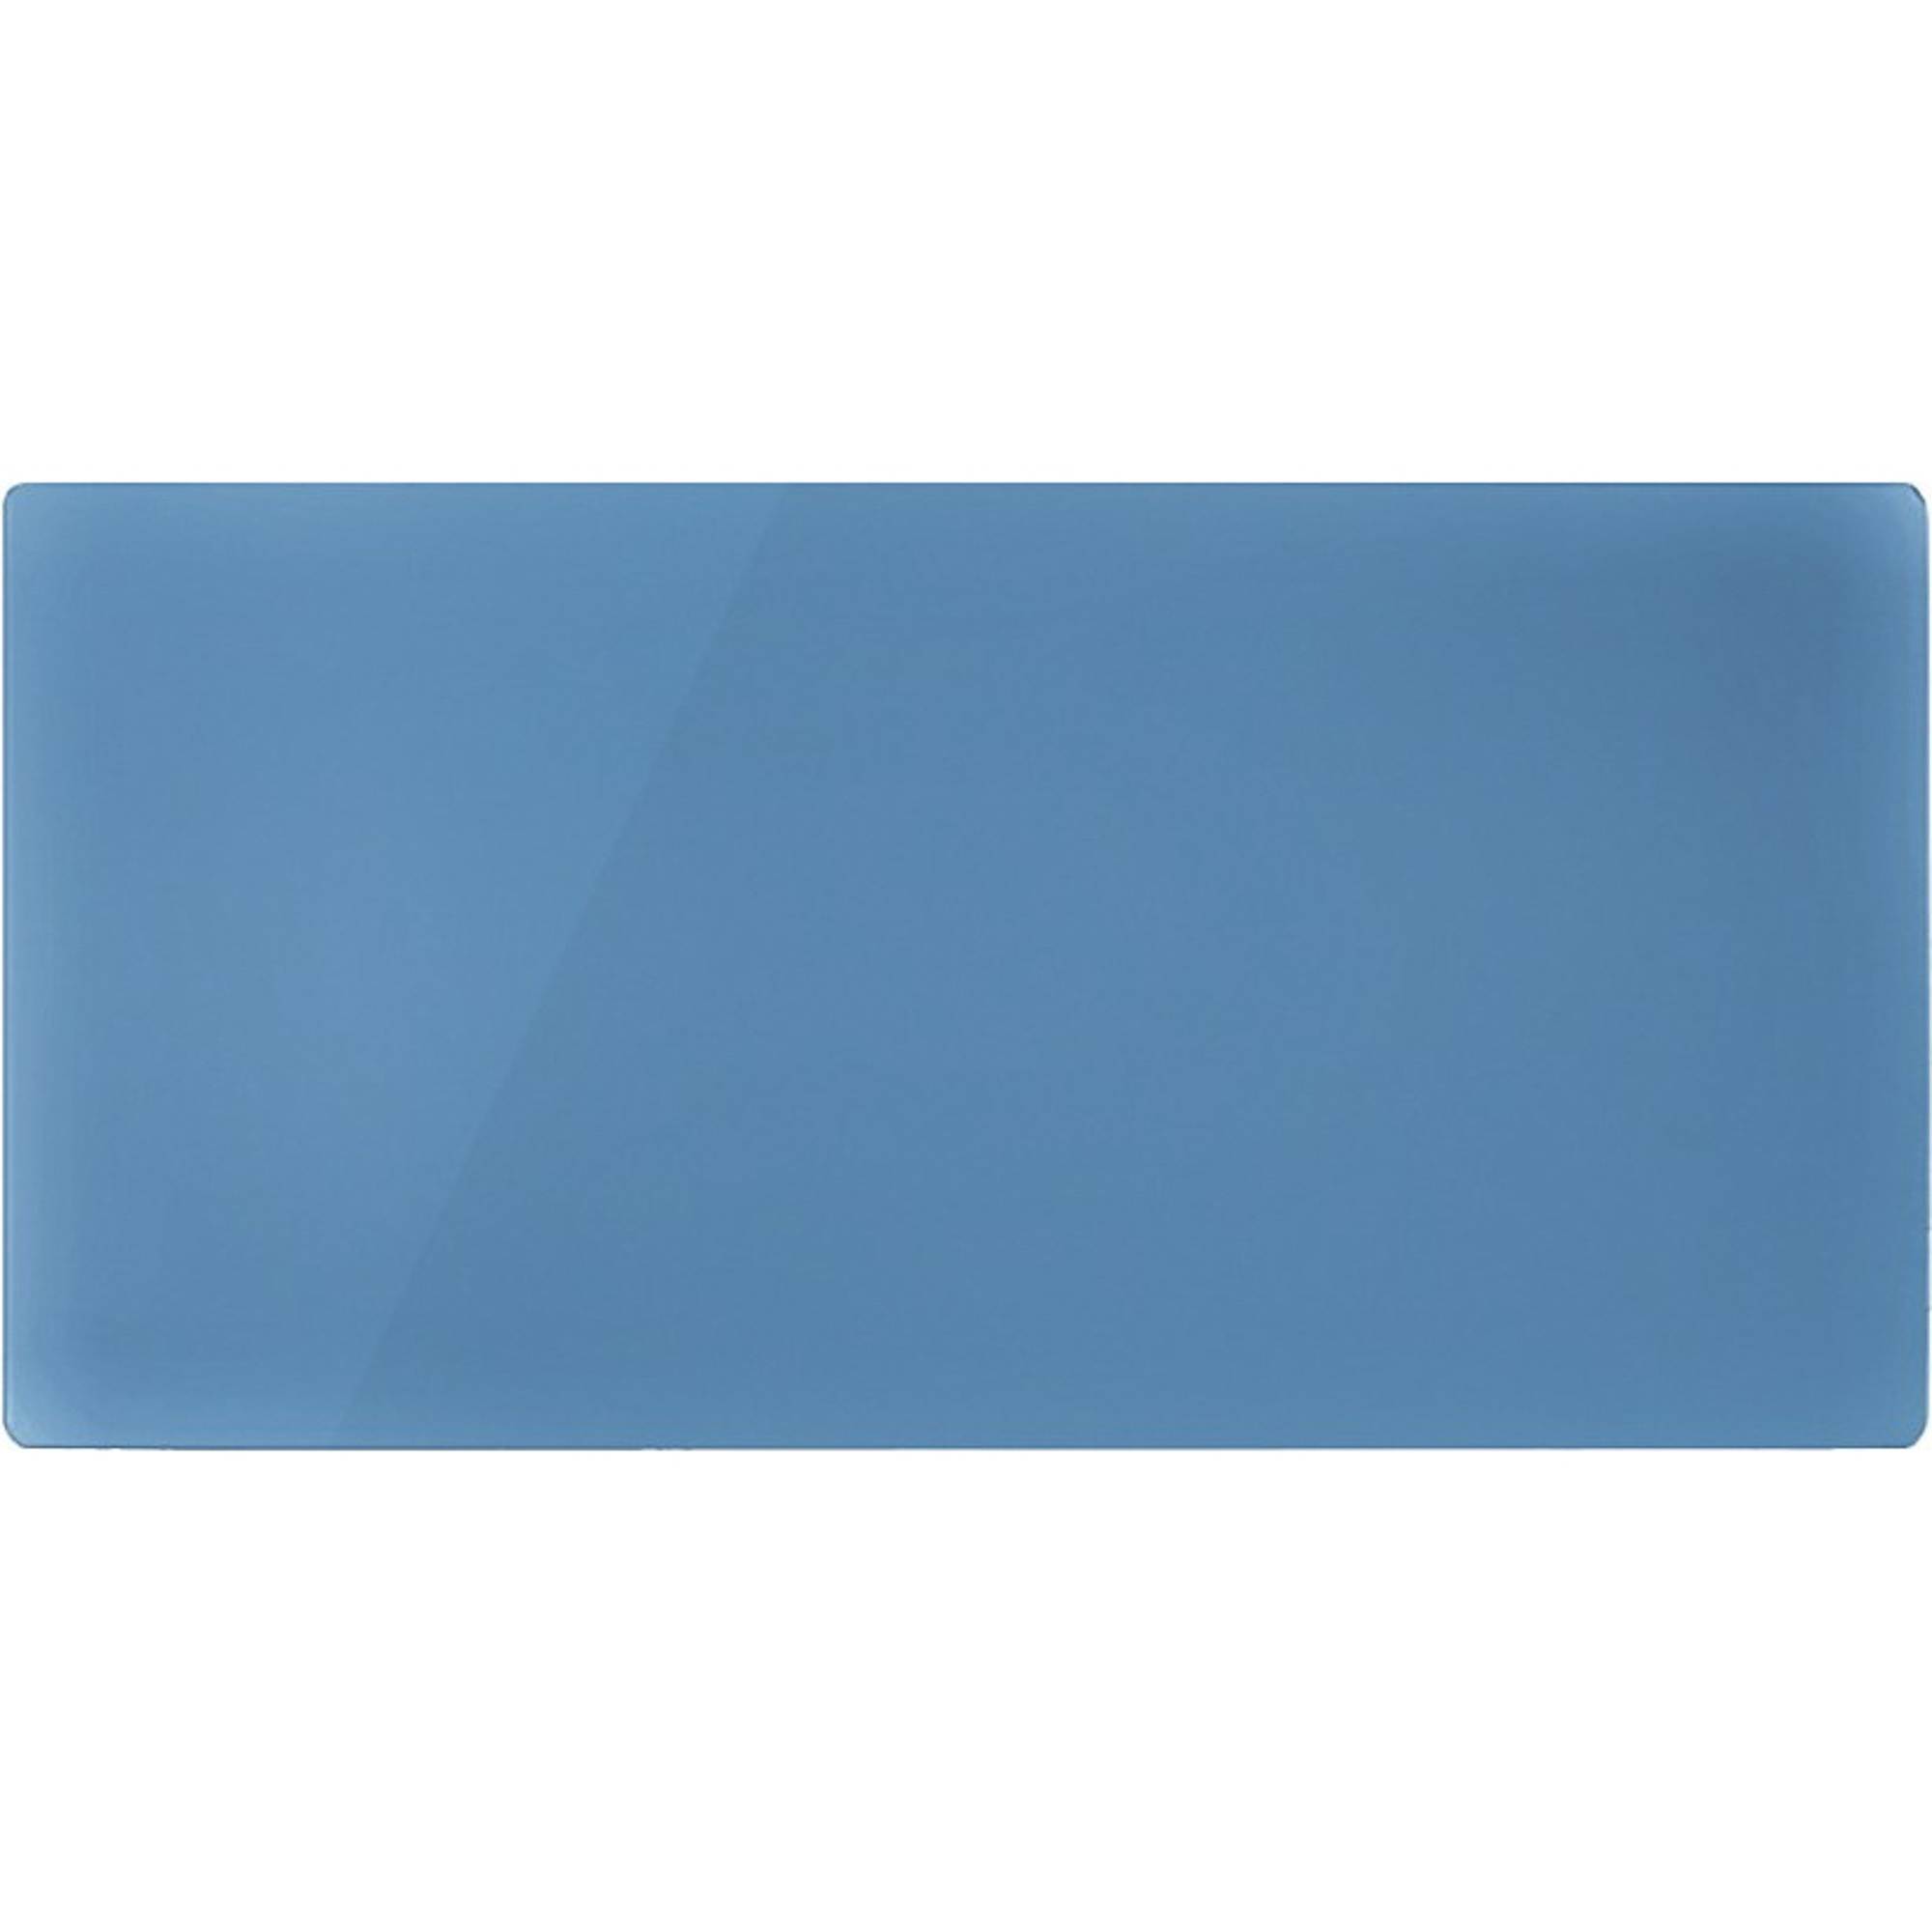 Декоративная панель Nobo NDG4 062 Retro Blue